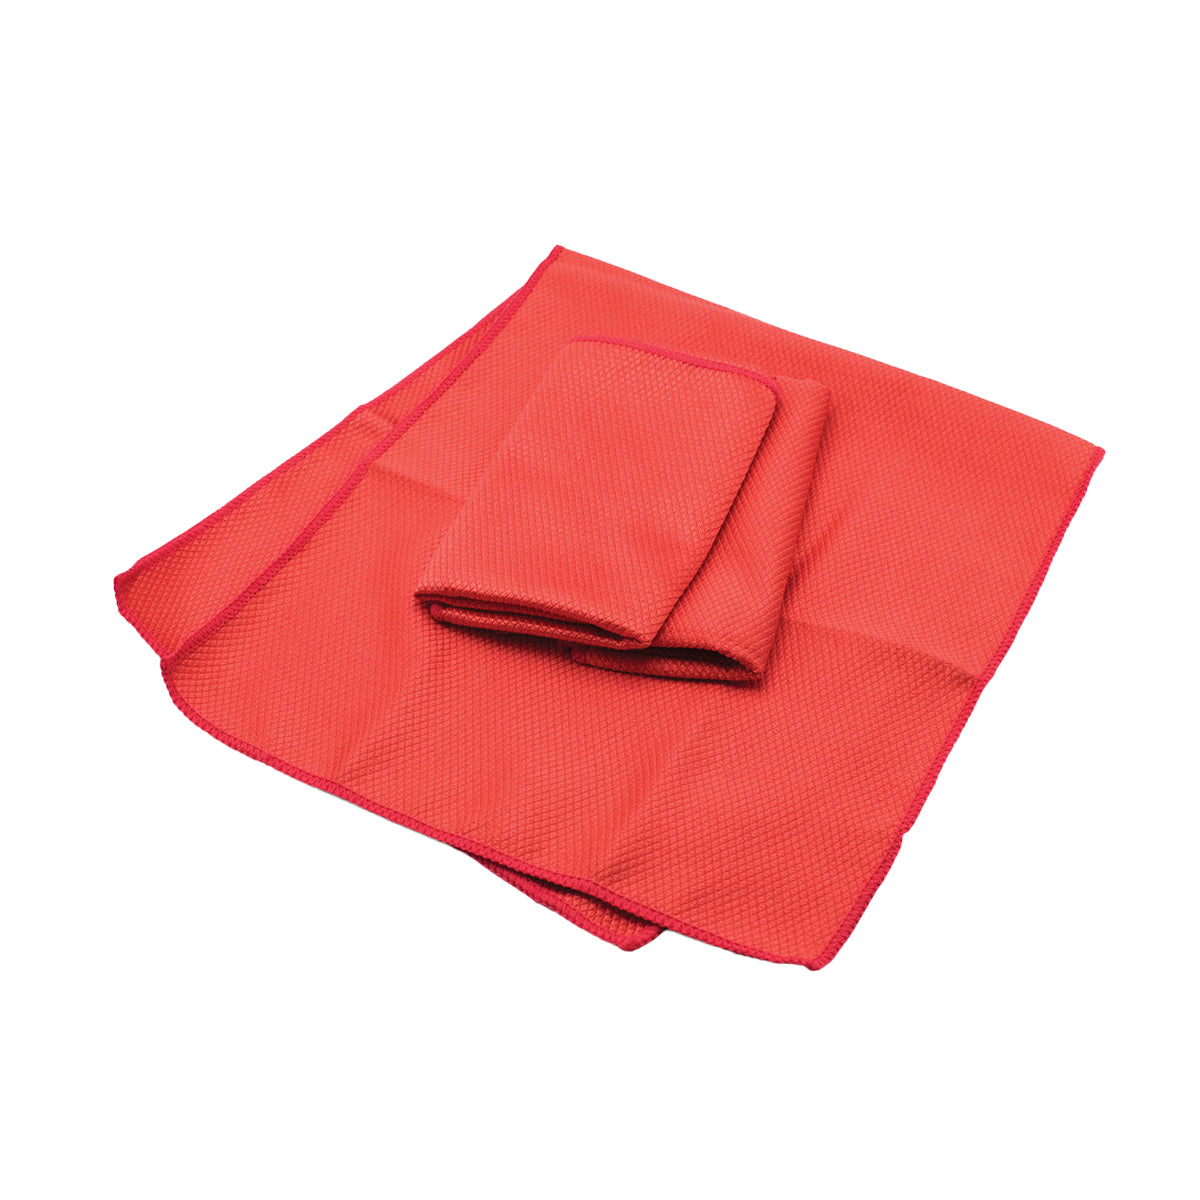 Shooter's Choice Microfiber Towel - 3 Pack